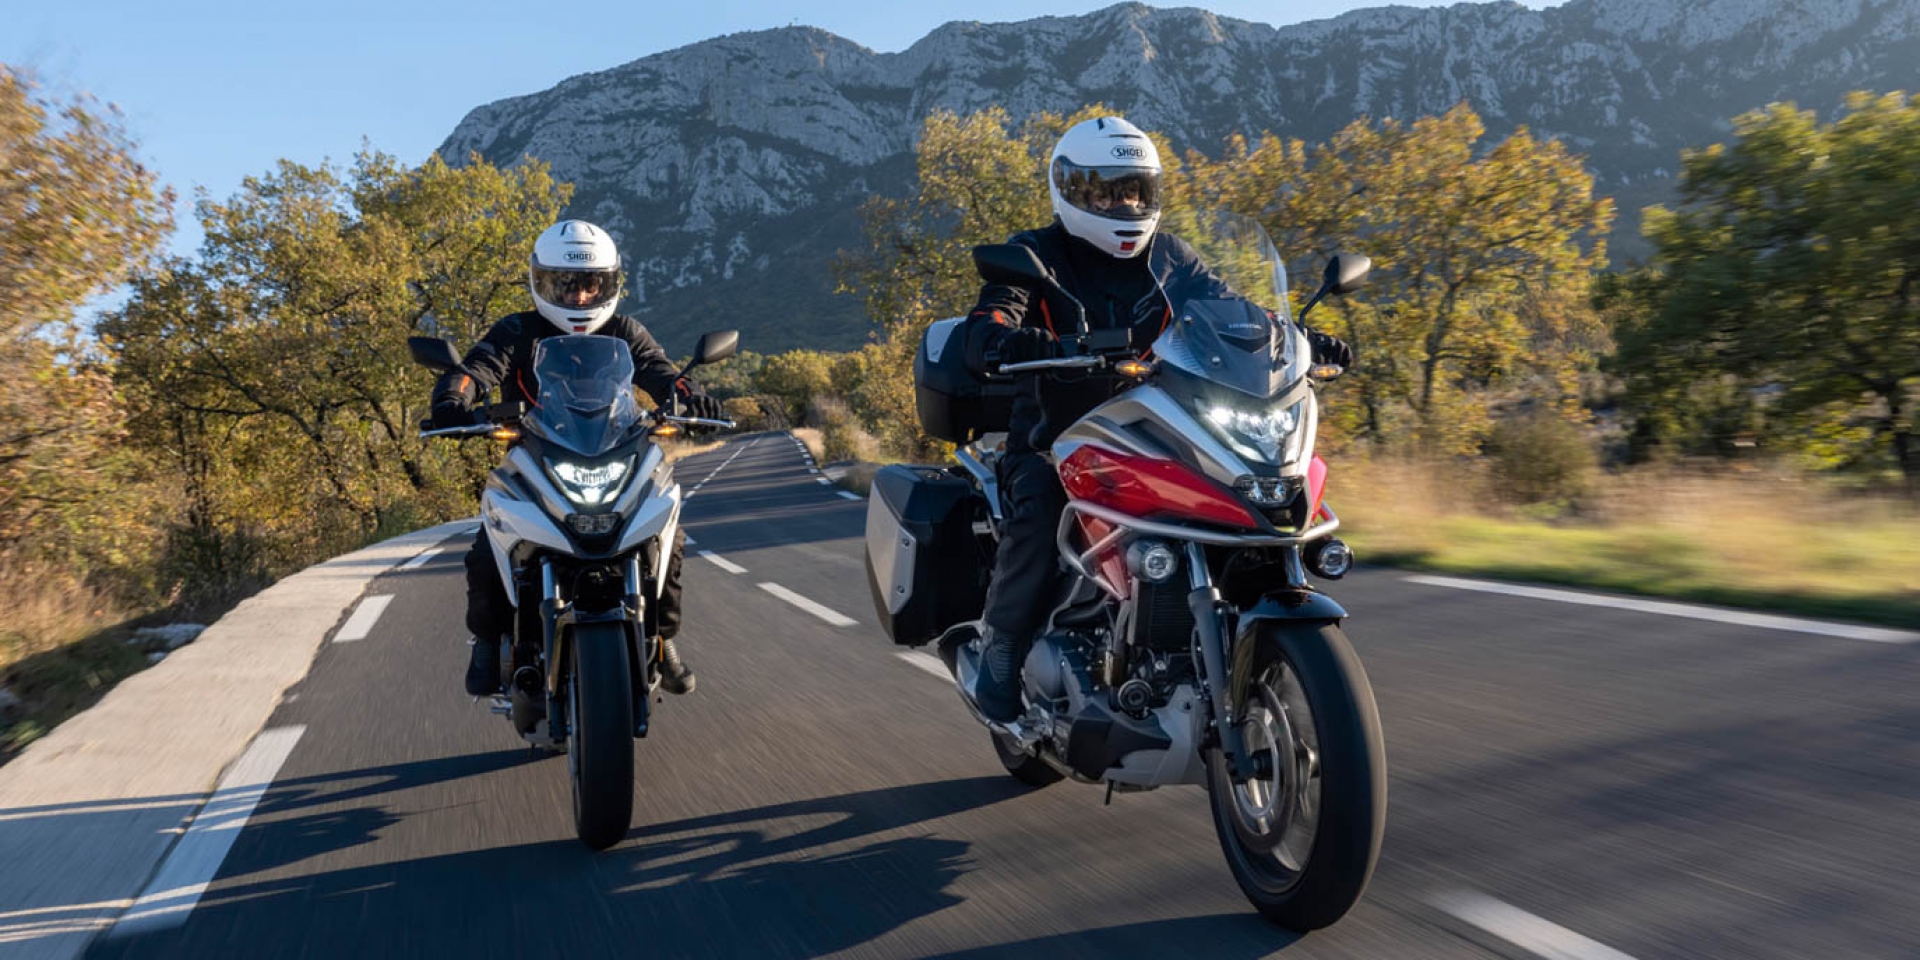 Honda Motorcycle 2021 NC750X嶄新科技 跨界登場 39.8萬預接啟動